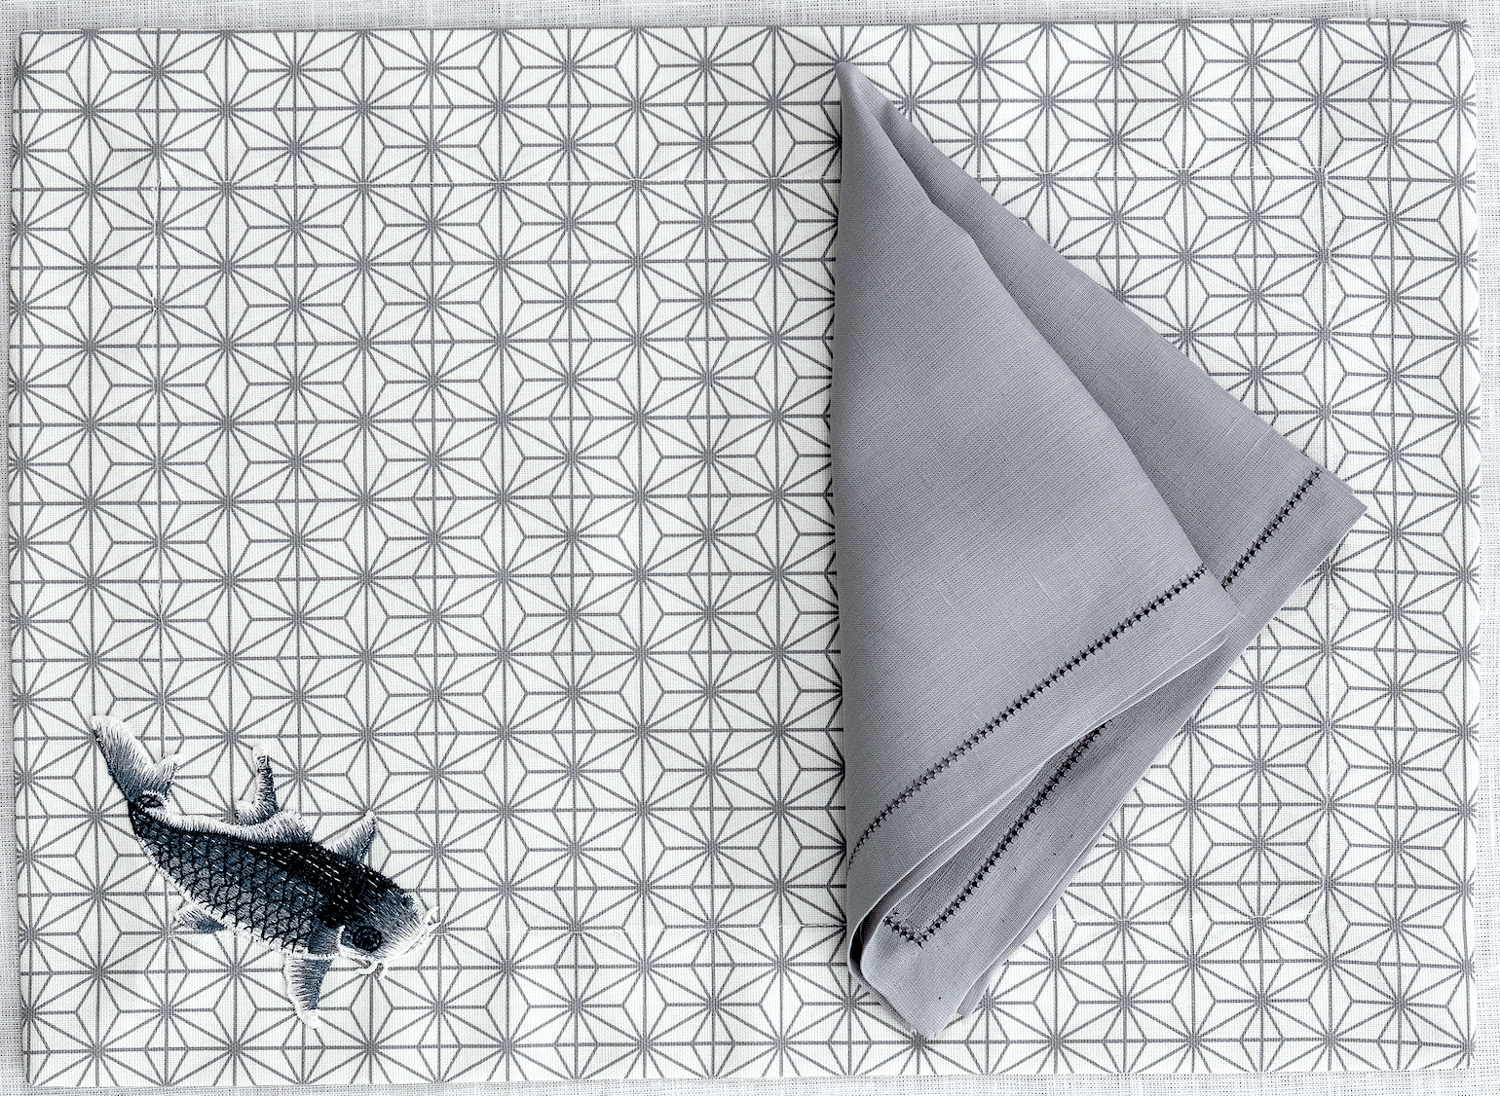 Image of 2 Tovagliette americane Origami con ricamo - 2 Origami placemats with patch